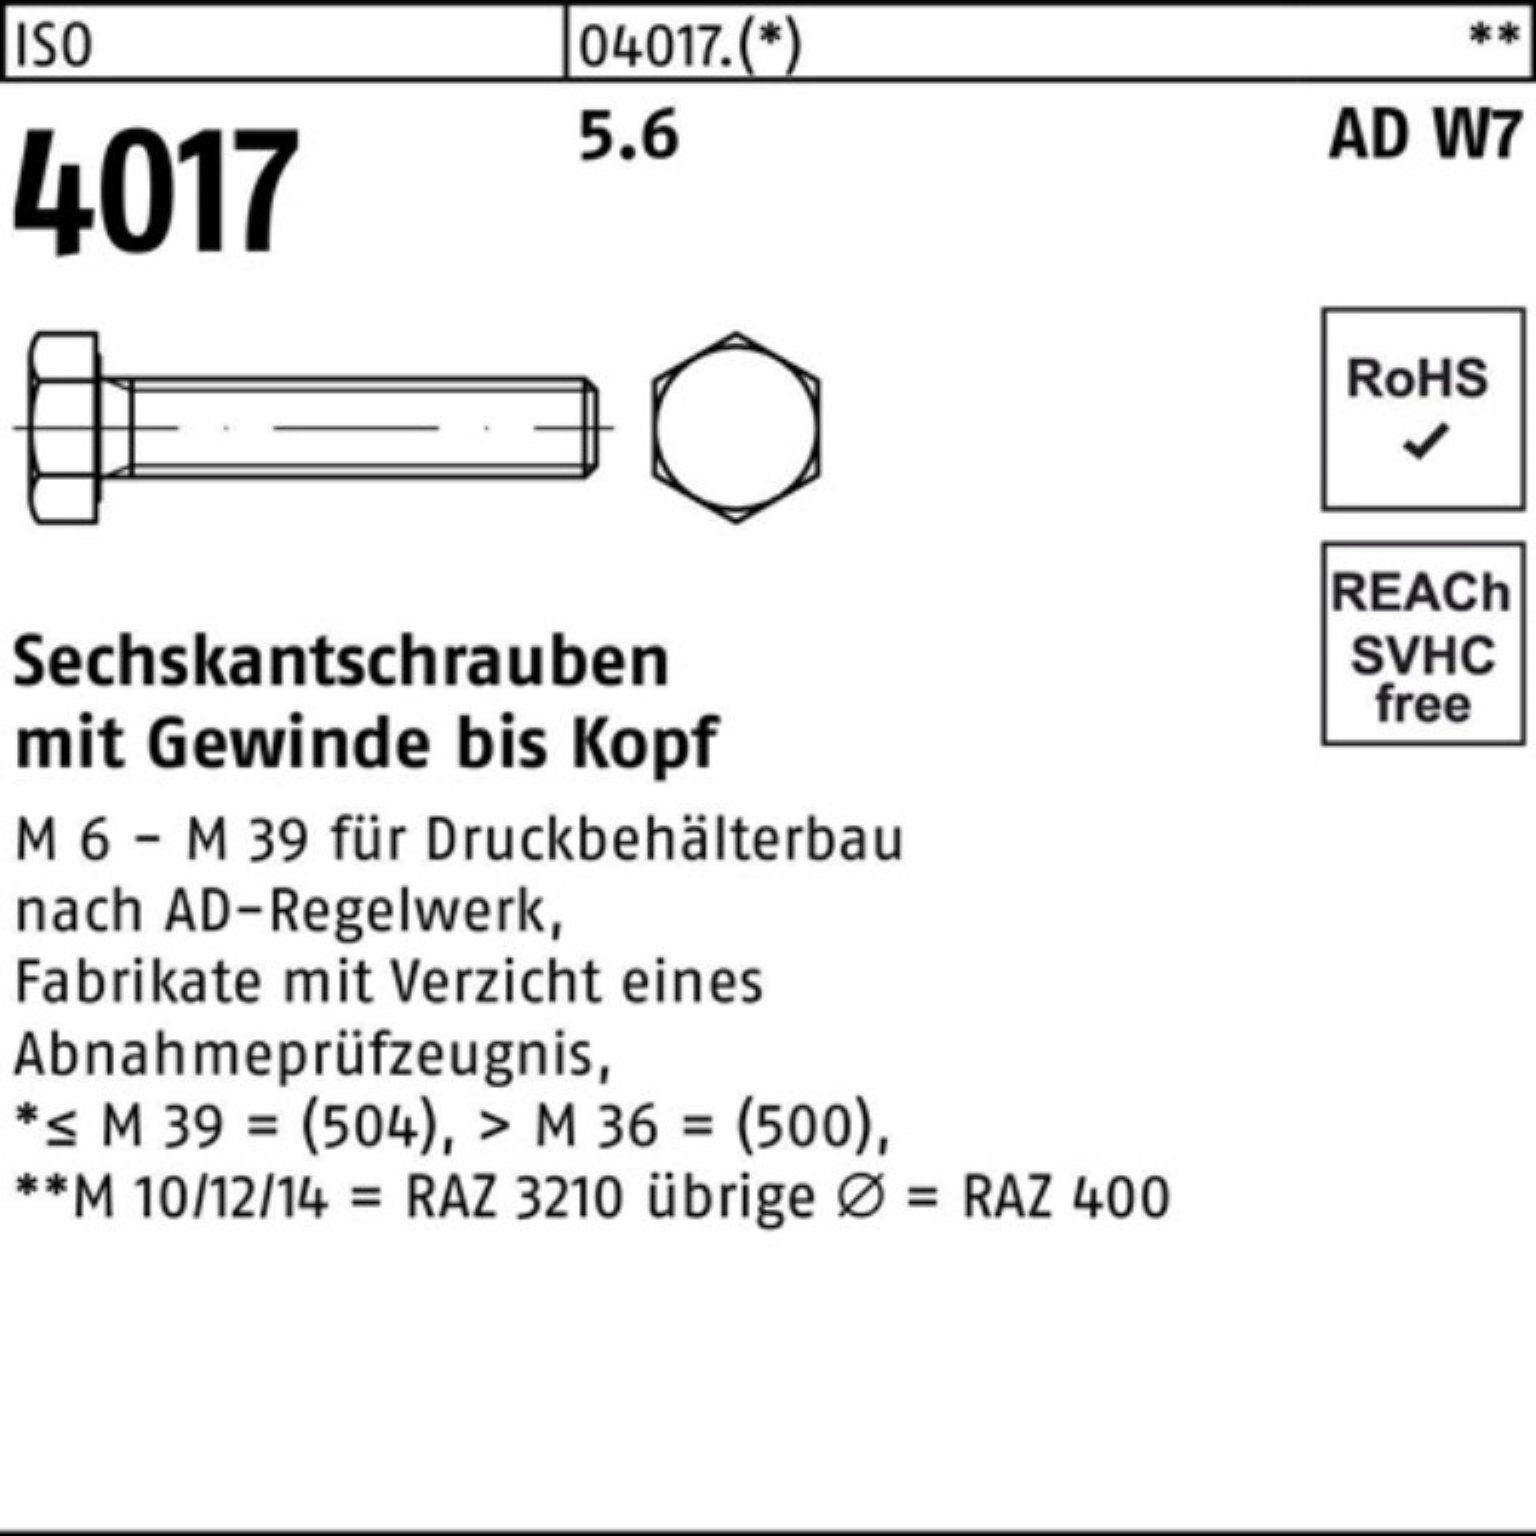 Bufab Sechskantschraube 100er Pack Sechskantschraube ISO 4017 VG M12x 80 5.6 AD W7 50 Stück I